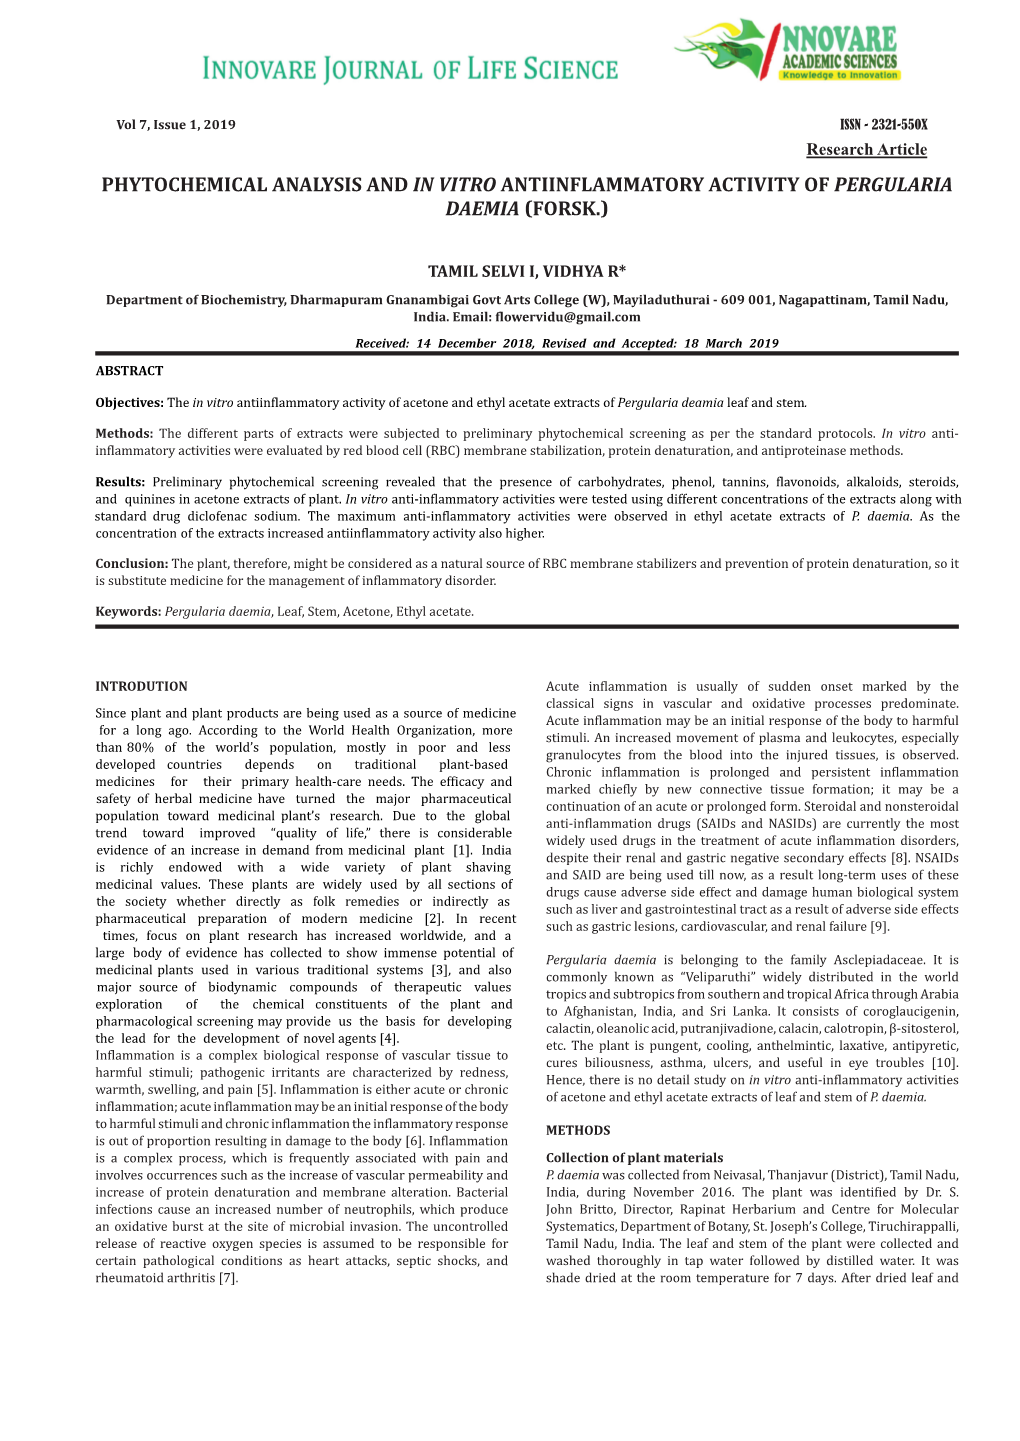 Phytochemical Analysis and in Vitro Antiinflammatory Activity of Pergularia Daemia (Forsk.)